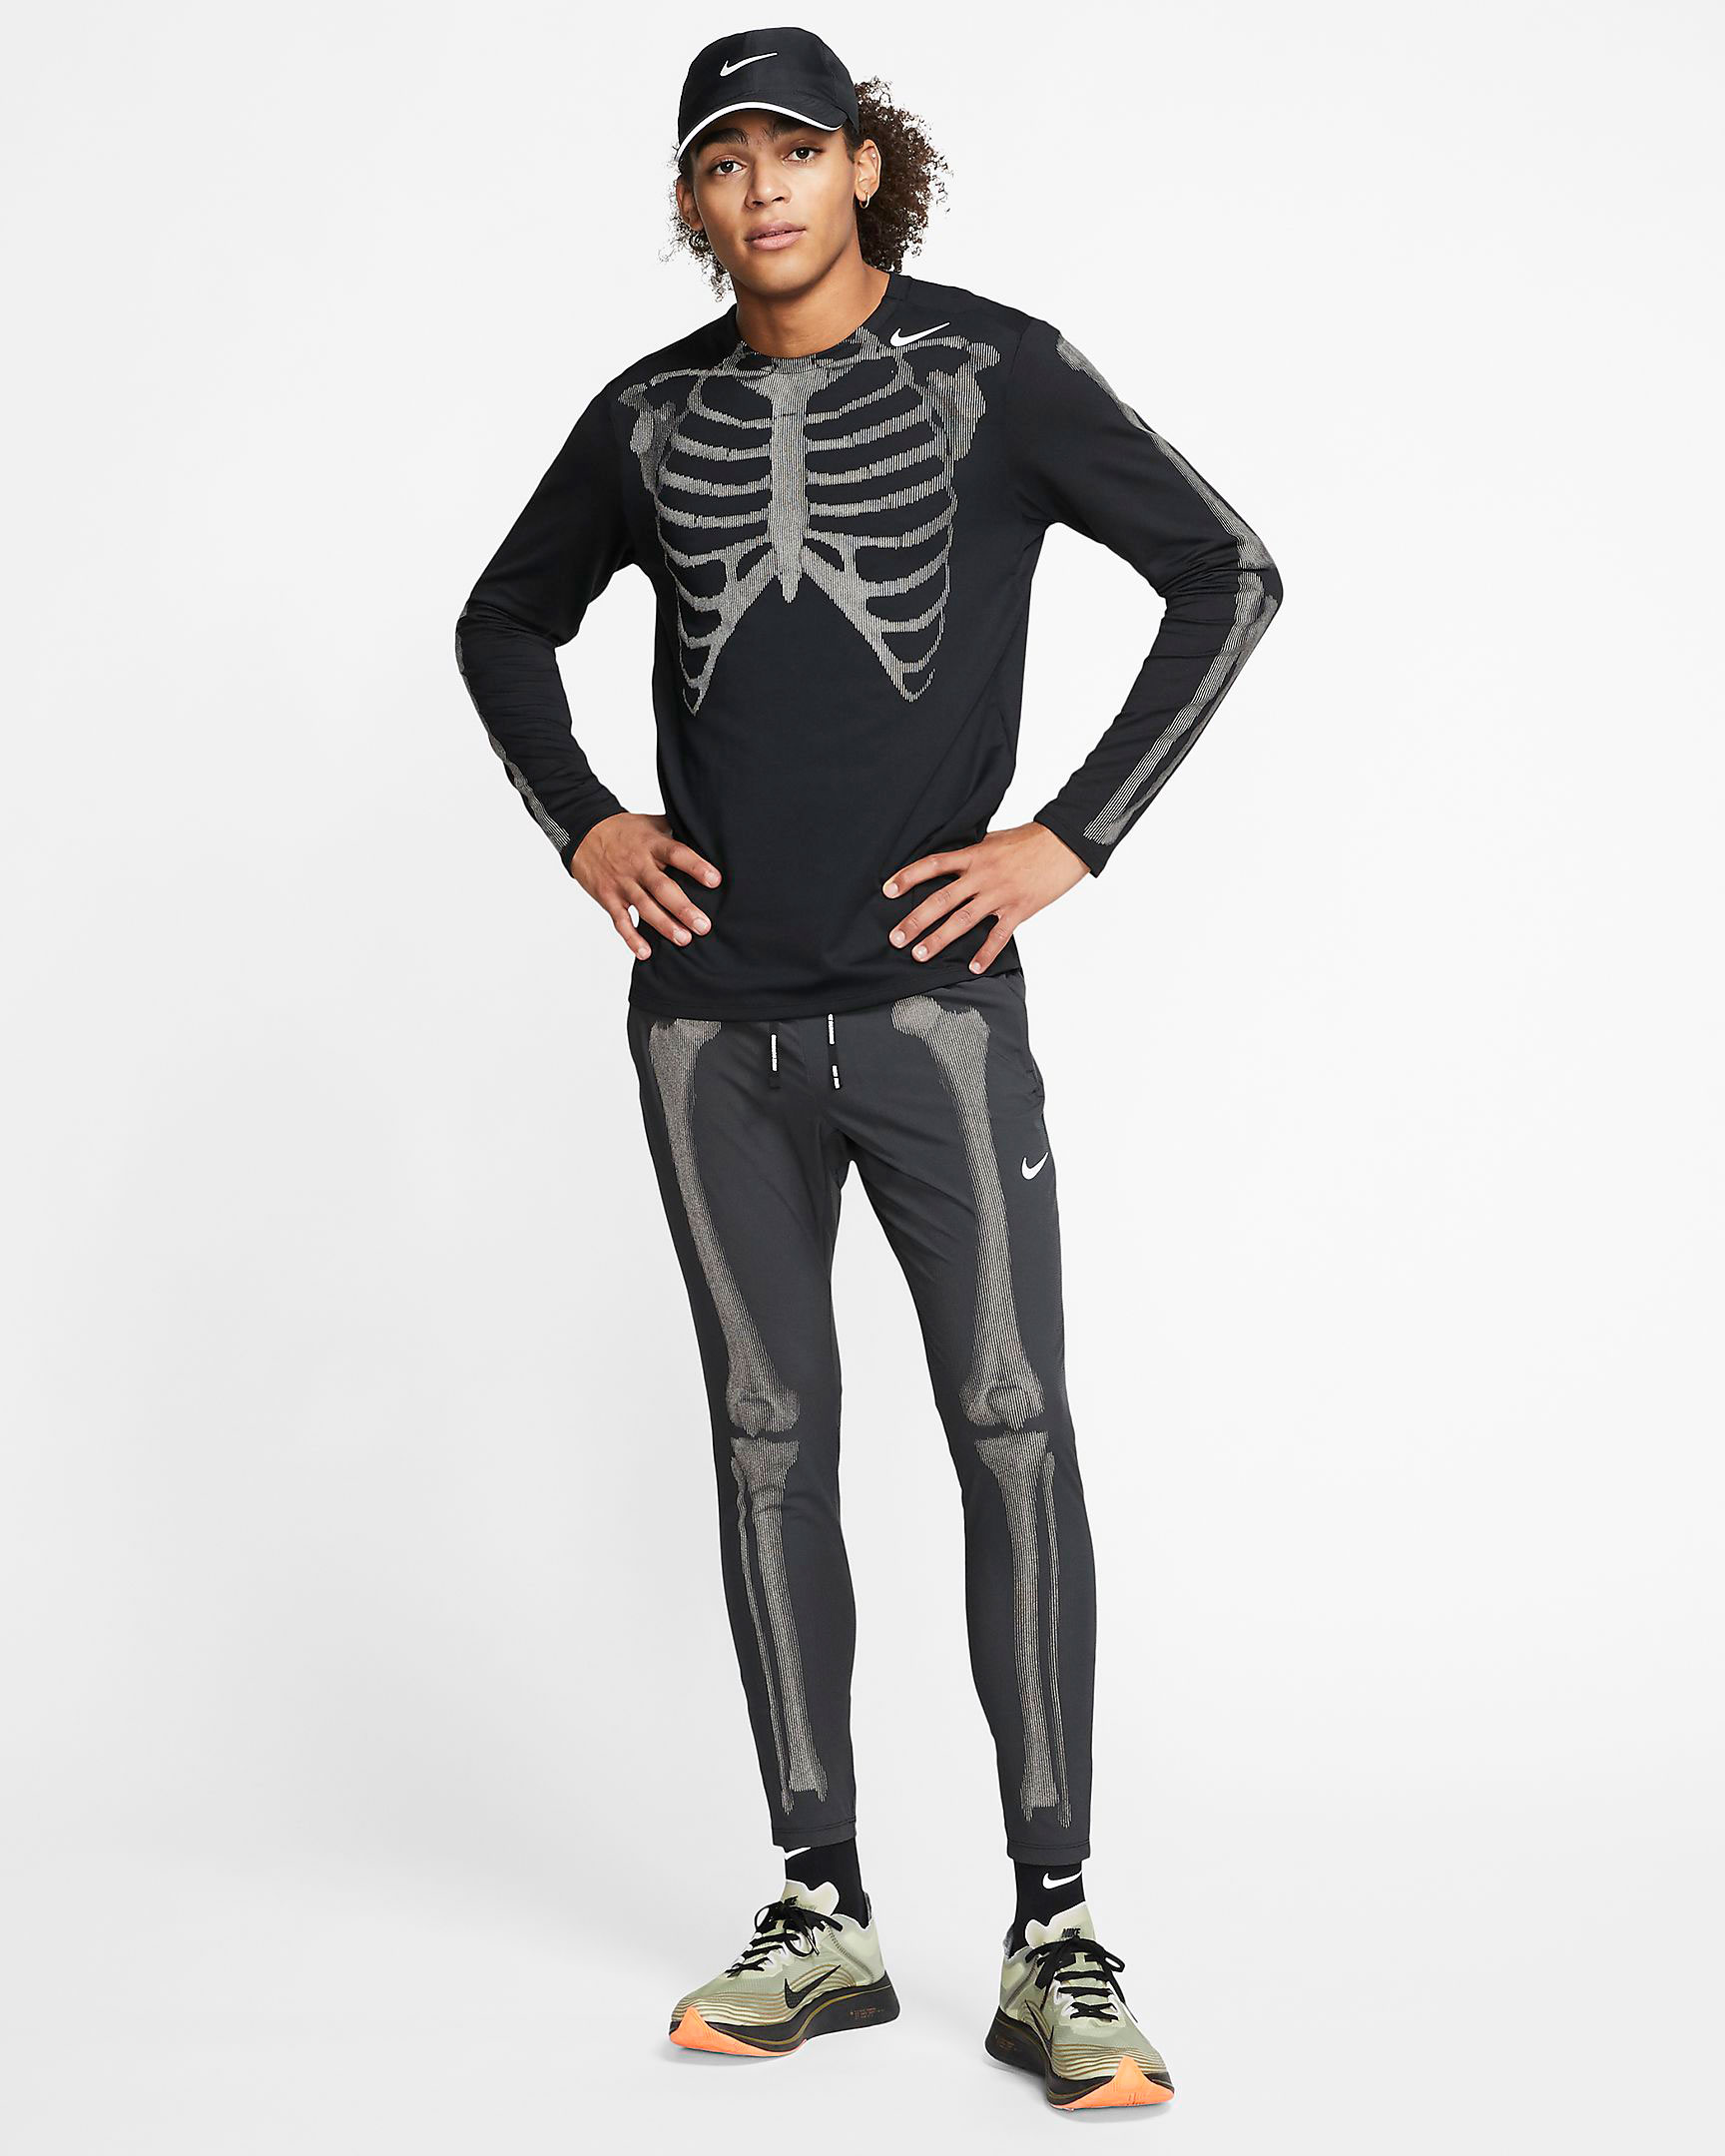 Nike Black Skeleton Shirt and Pants 